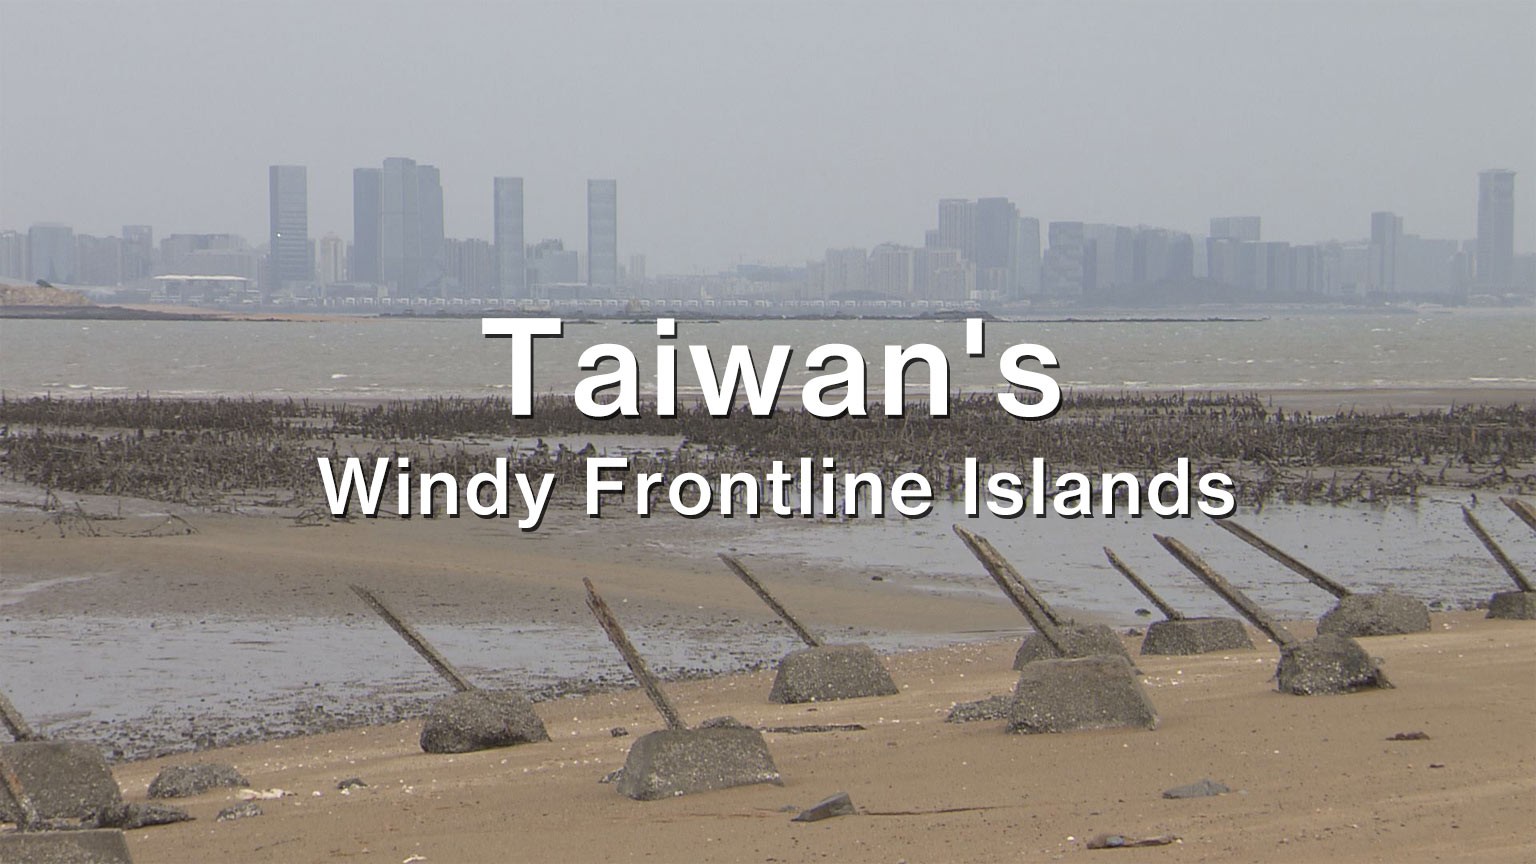 Taiwan's Windy Frontline Islands